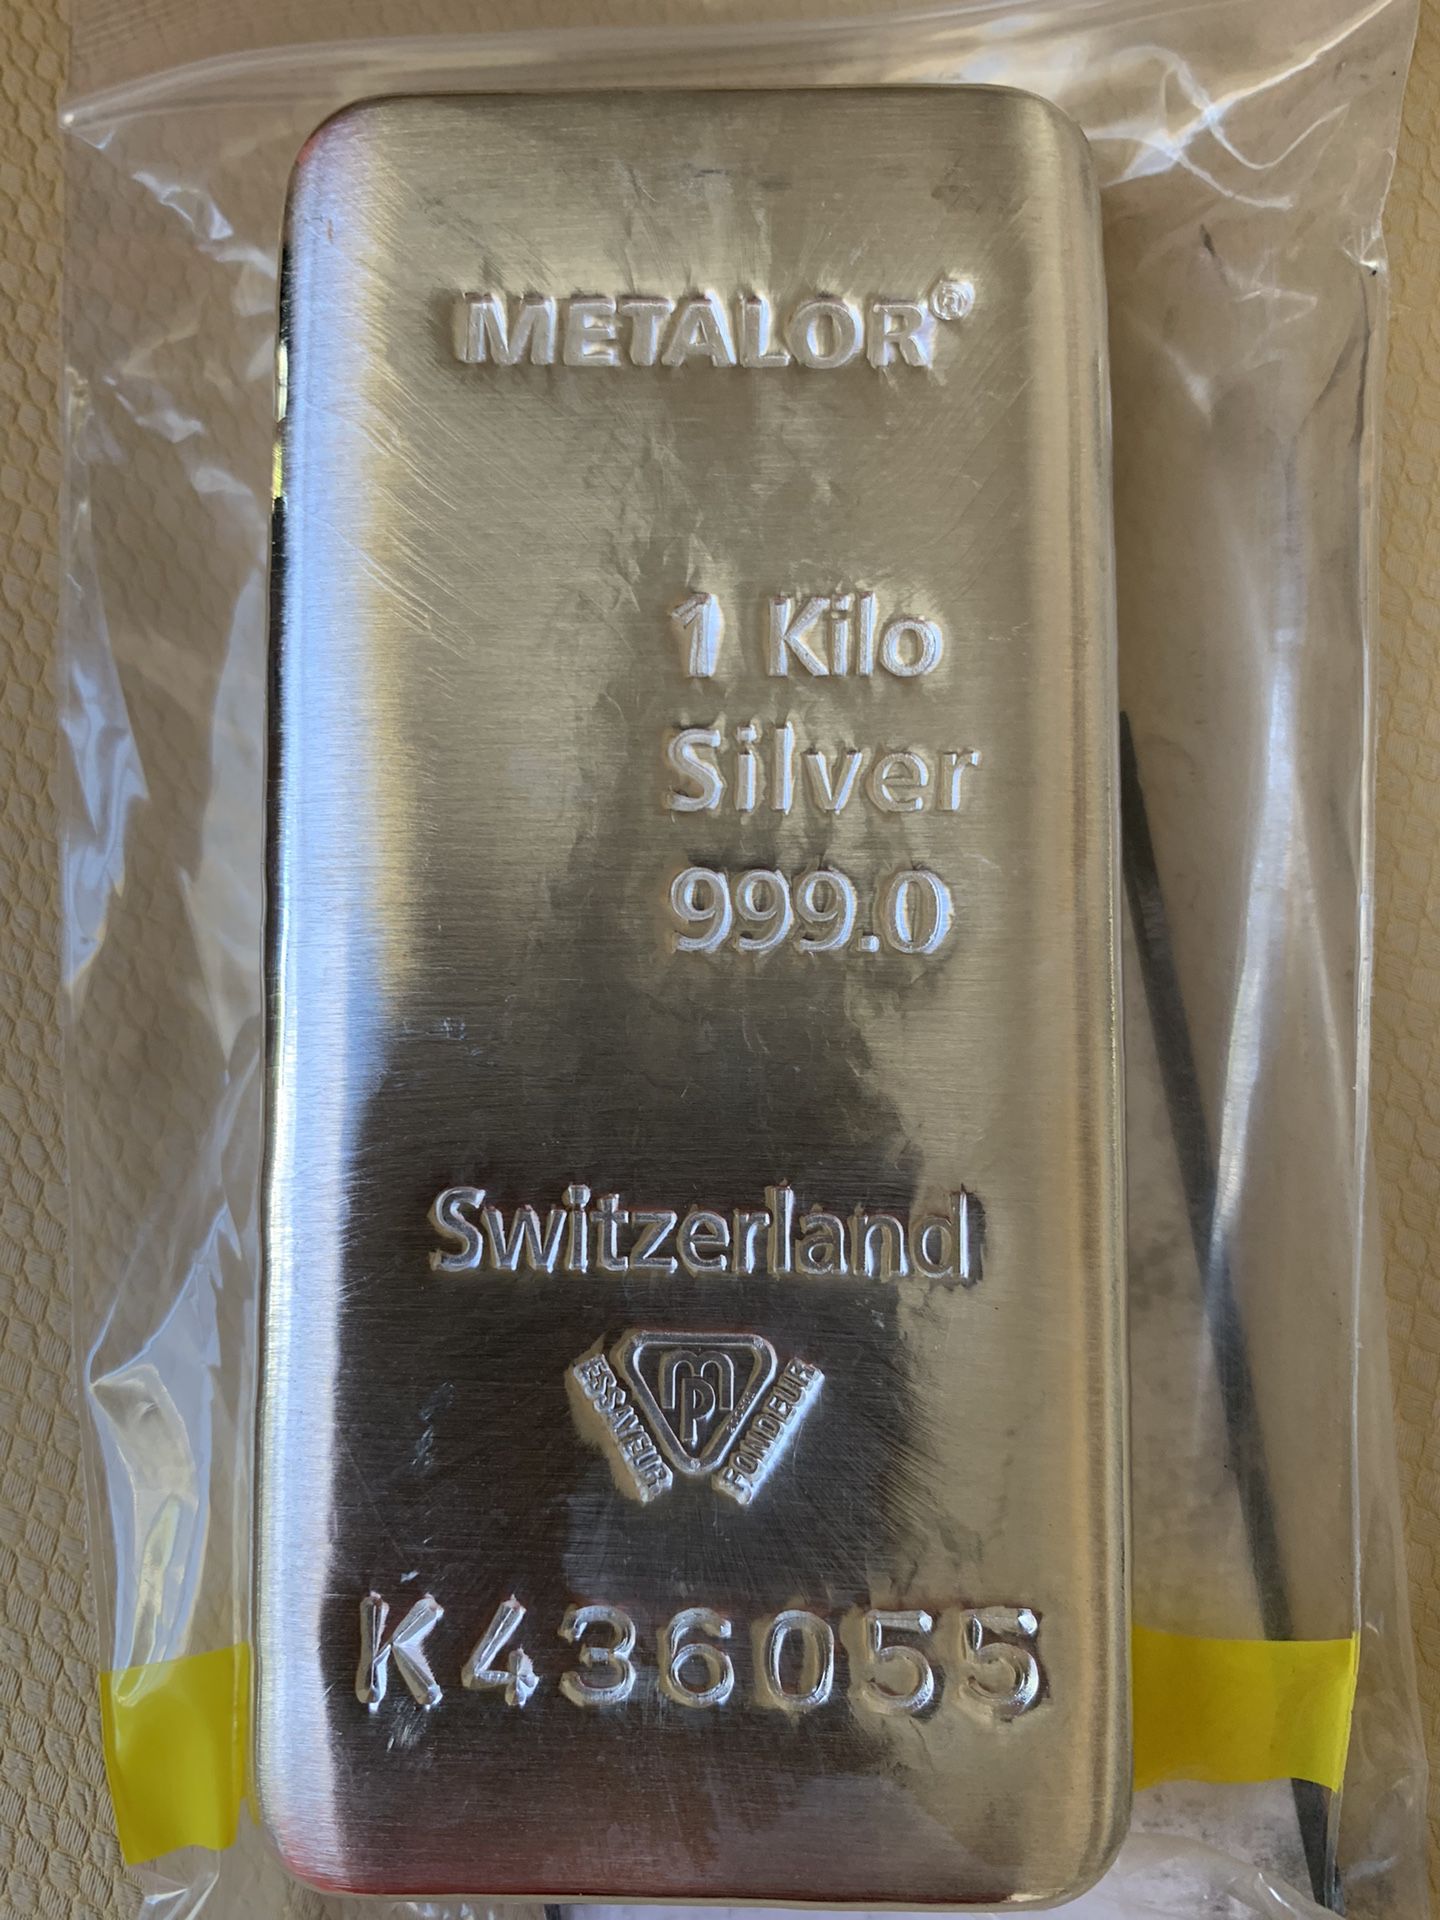 1 Kilo Silver Bar 999.0 Switzerland Metalor 